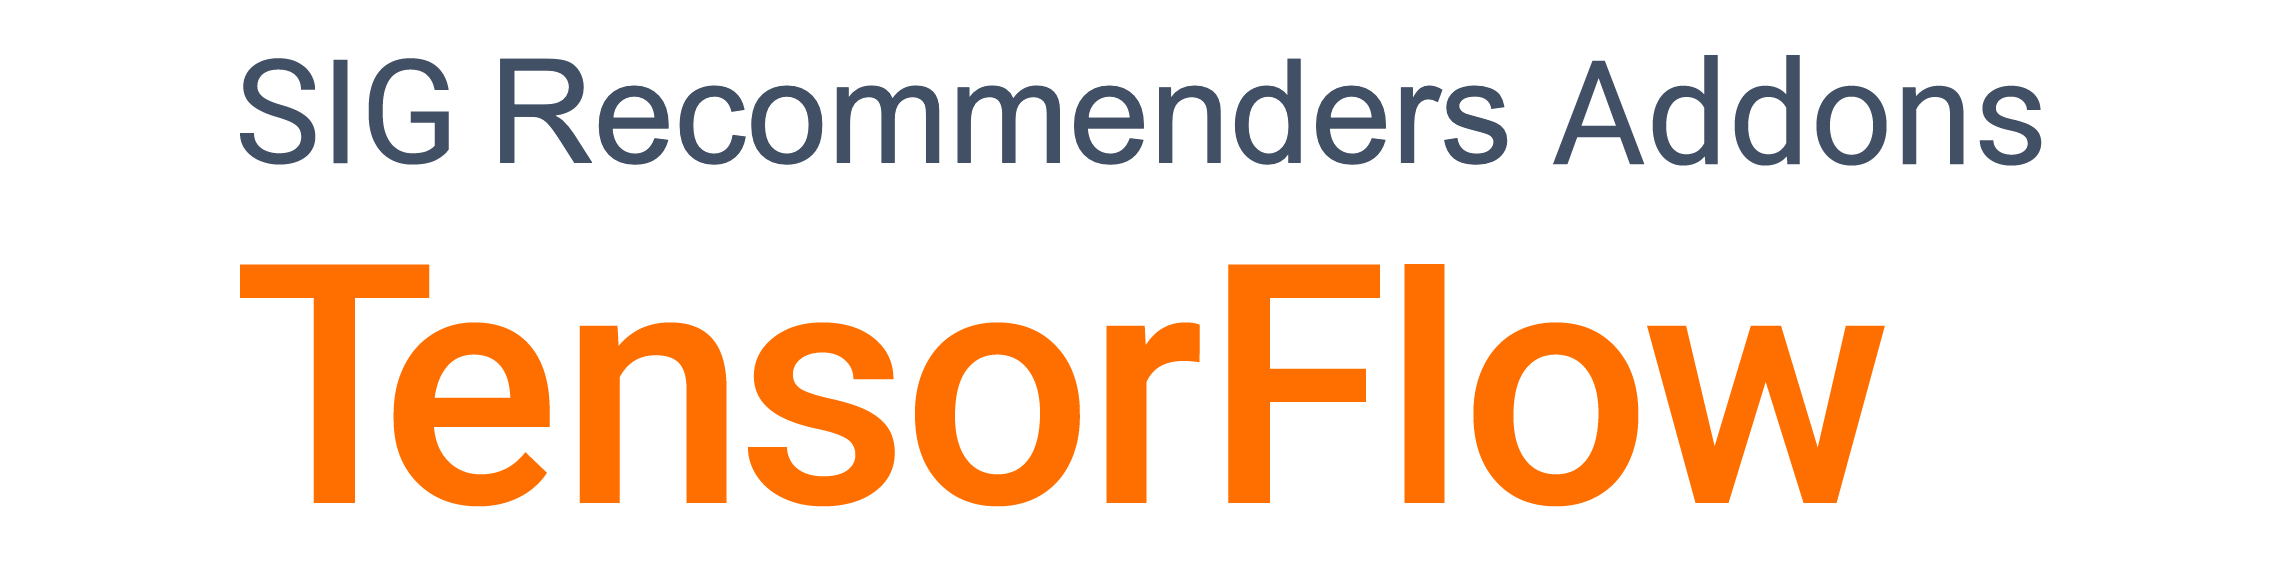 TensorFlow Recommenders logo